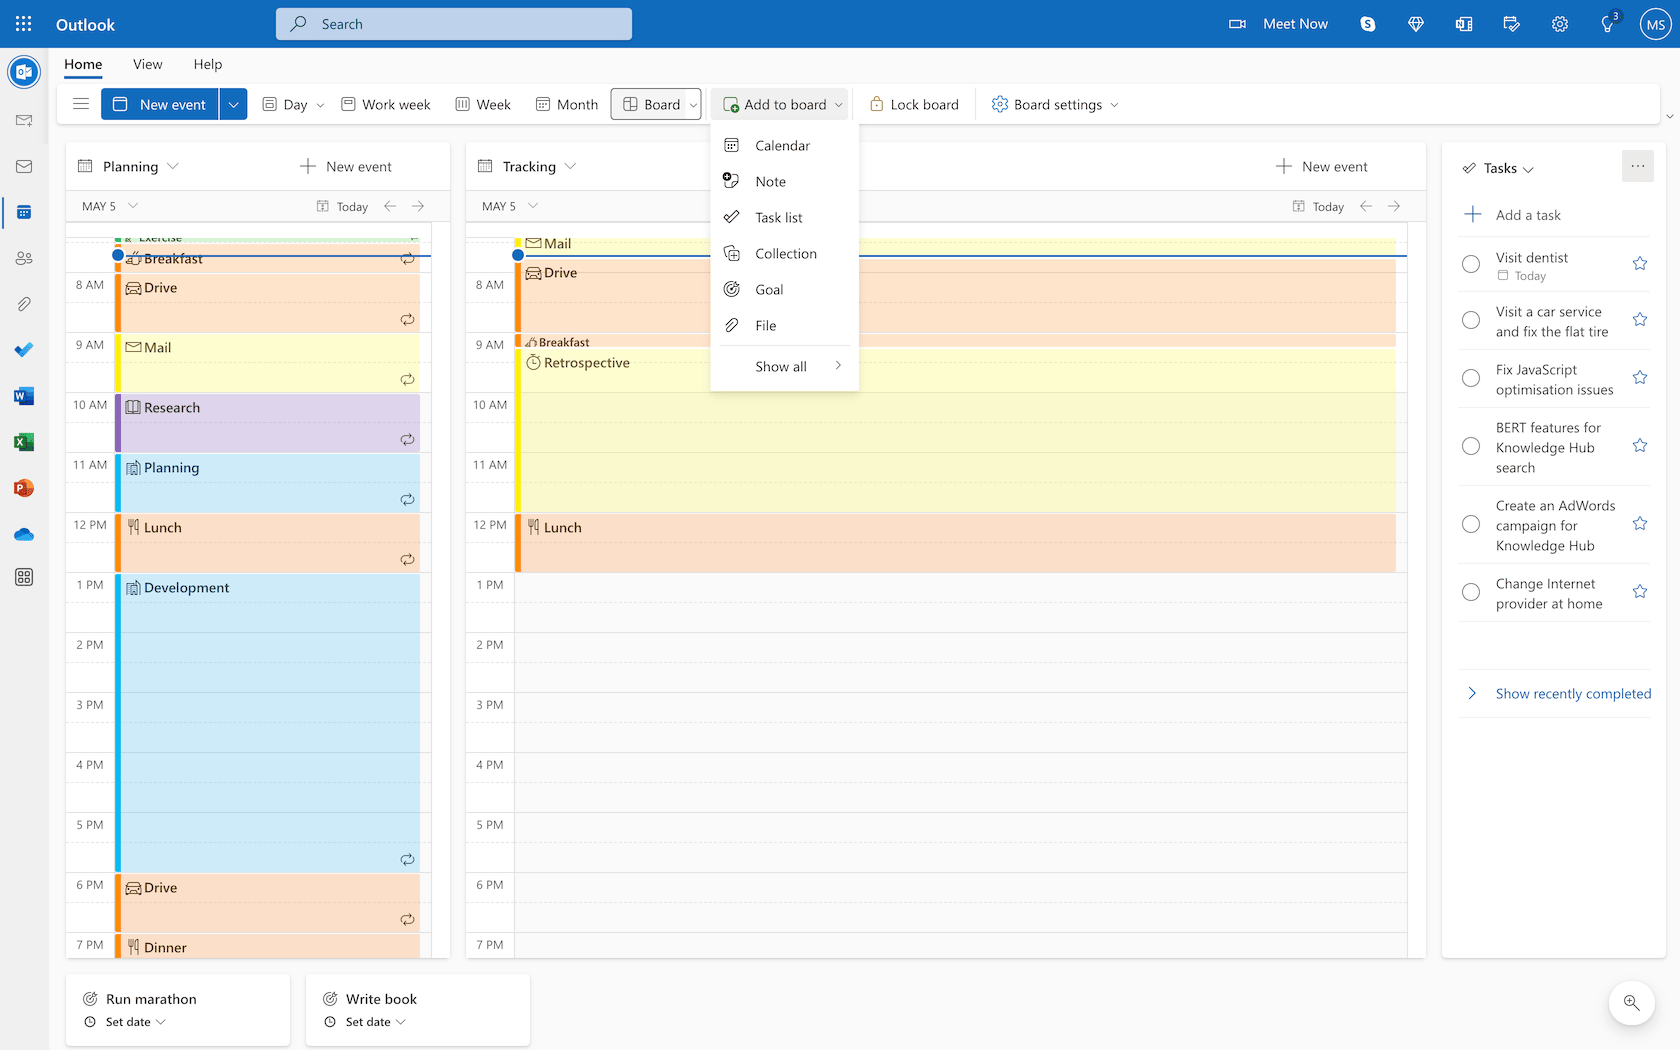 Activities and goals board in Outlook 365